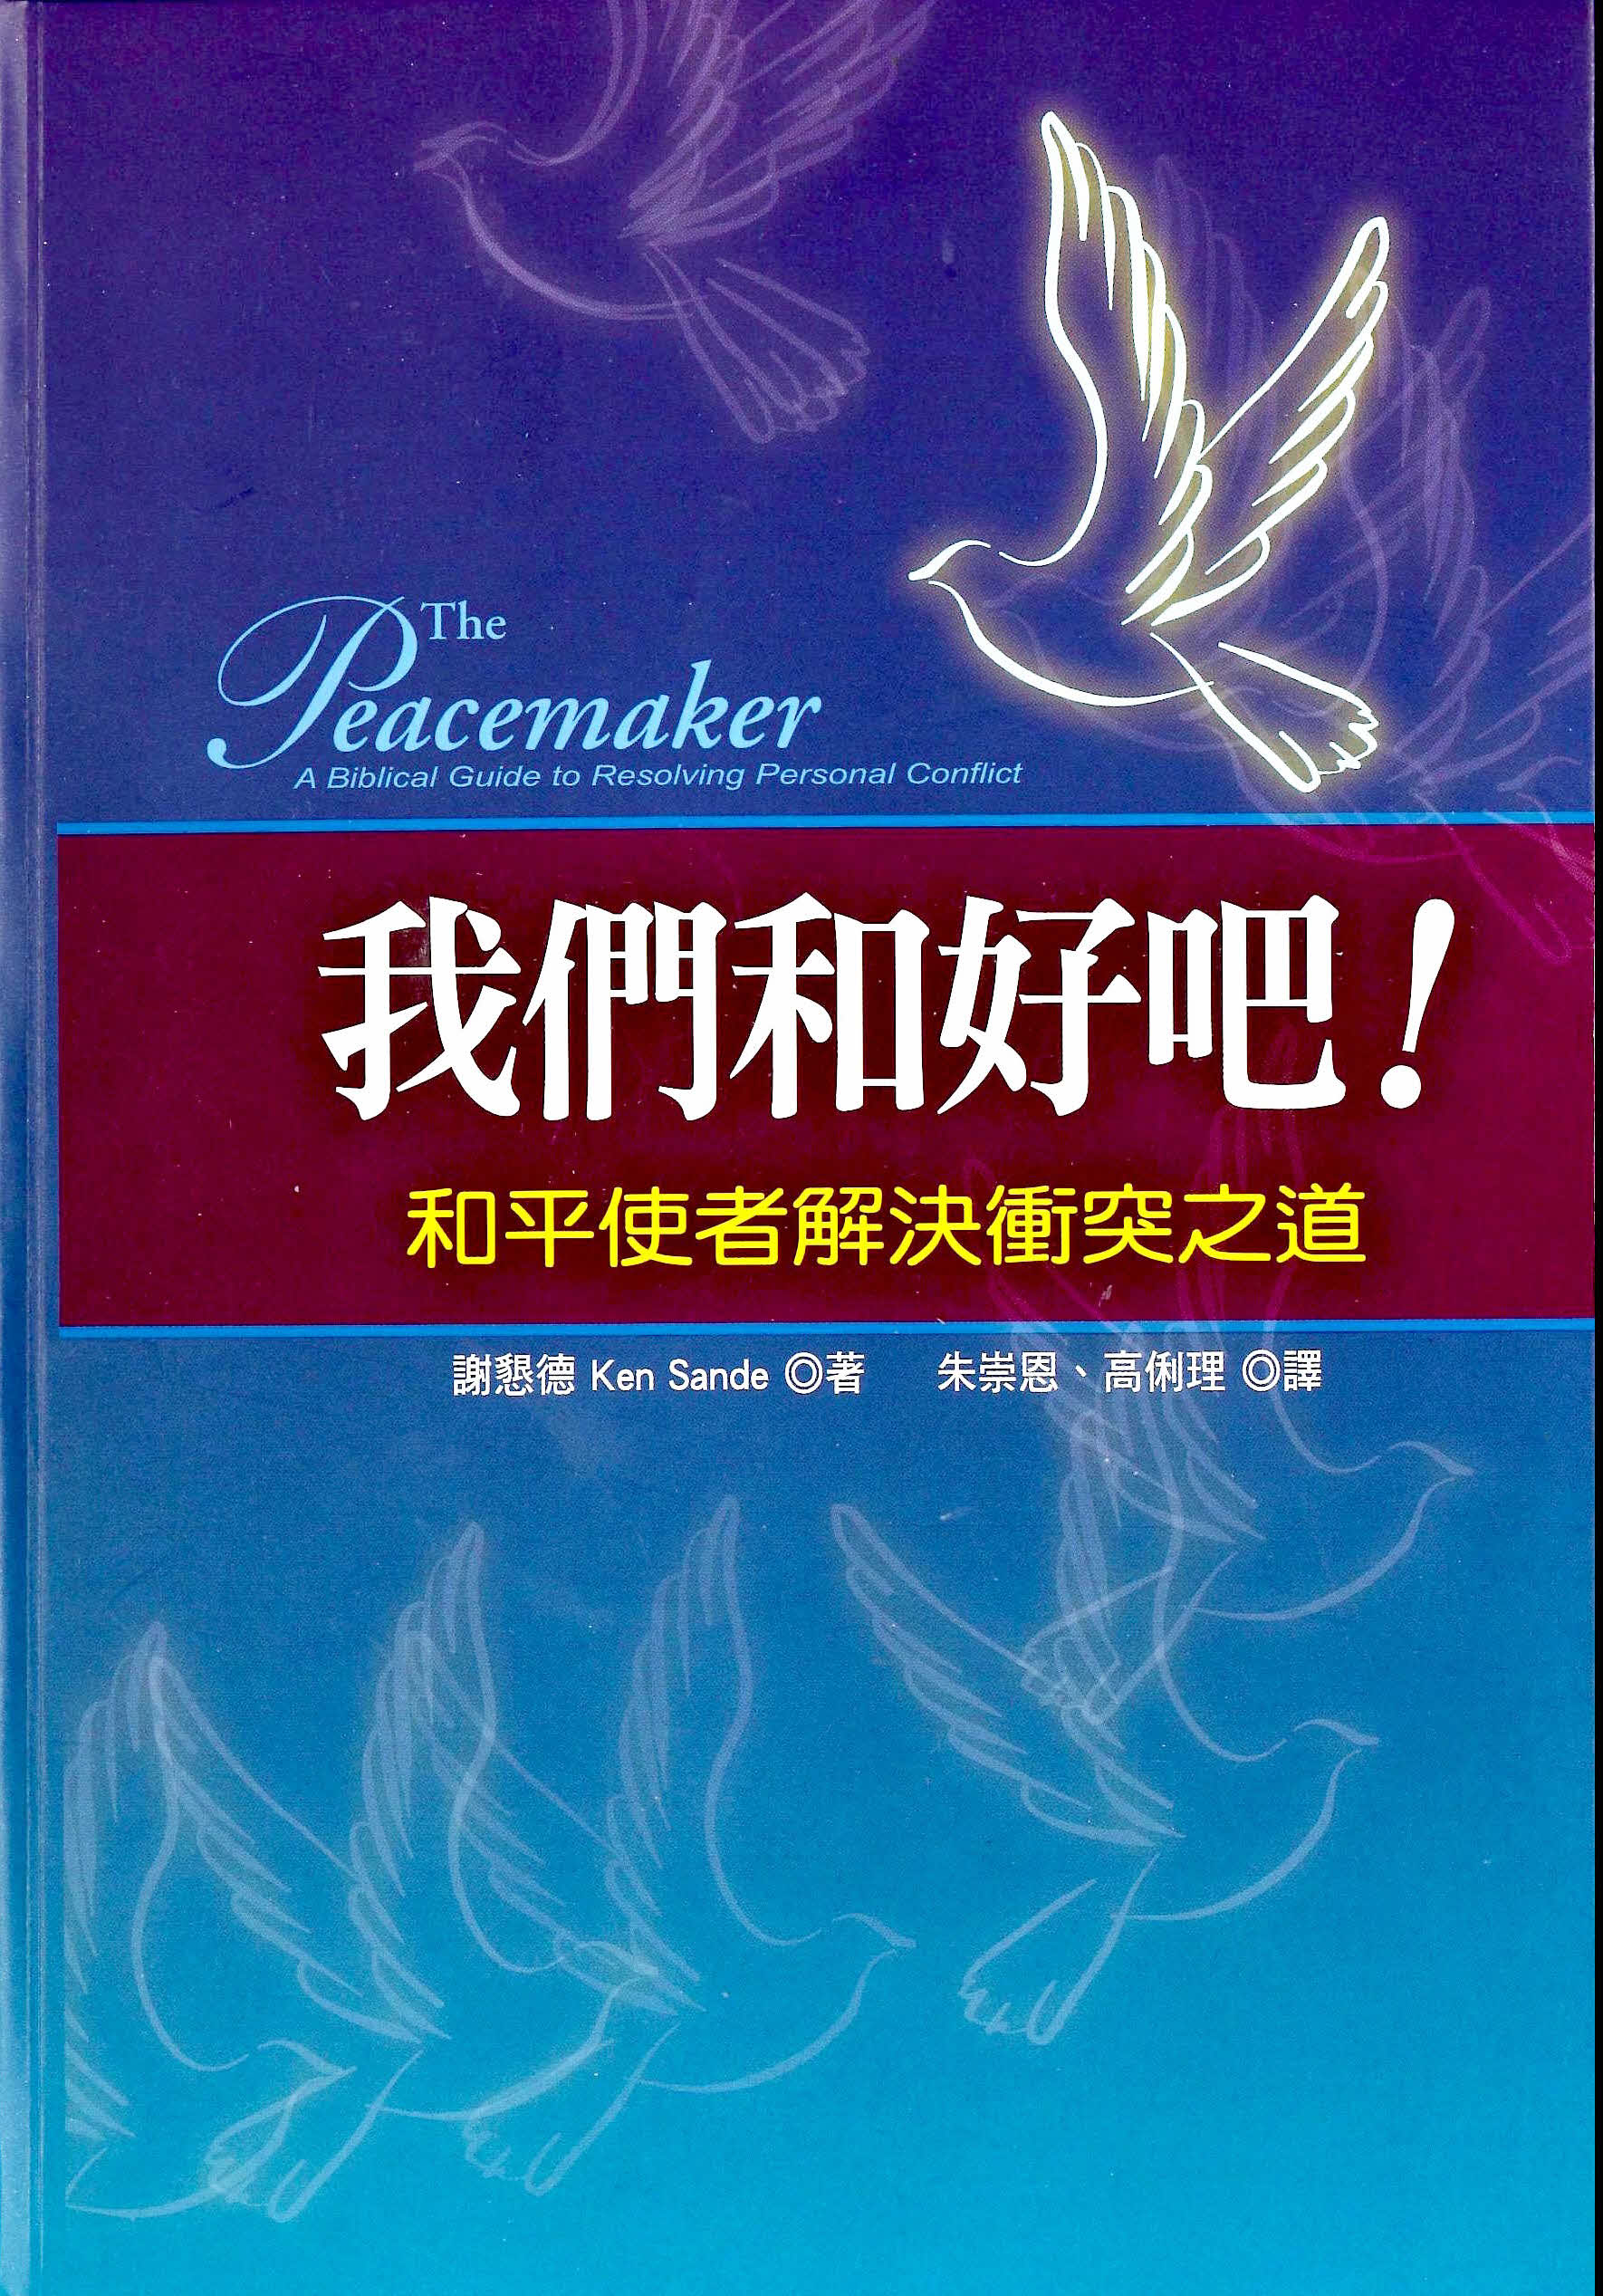 我們和好吧-和平使者解決衝突之道 -- The Peacemaker: a Biblical Guide to Resolving Personal Conflict